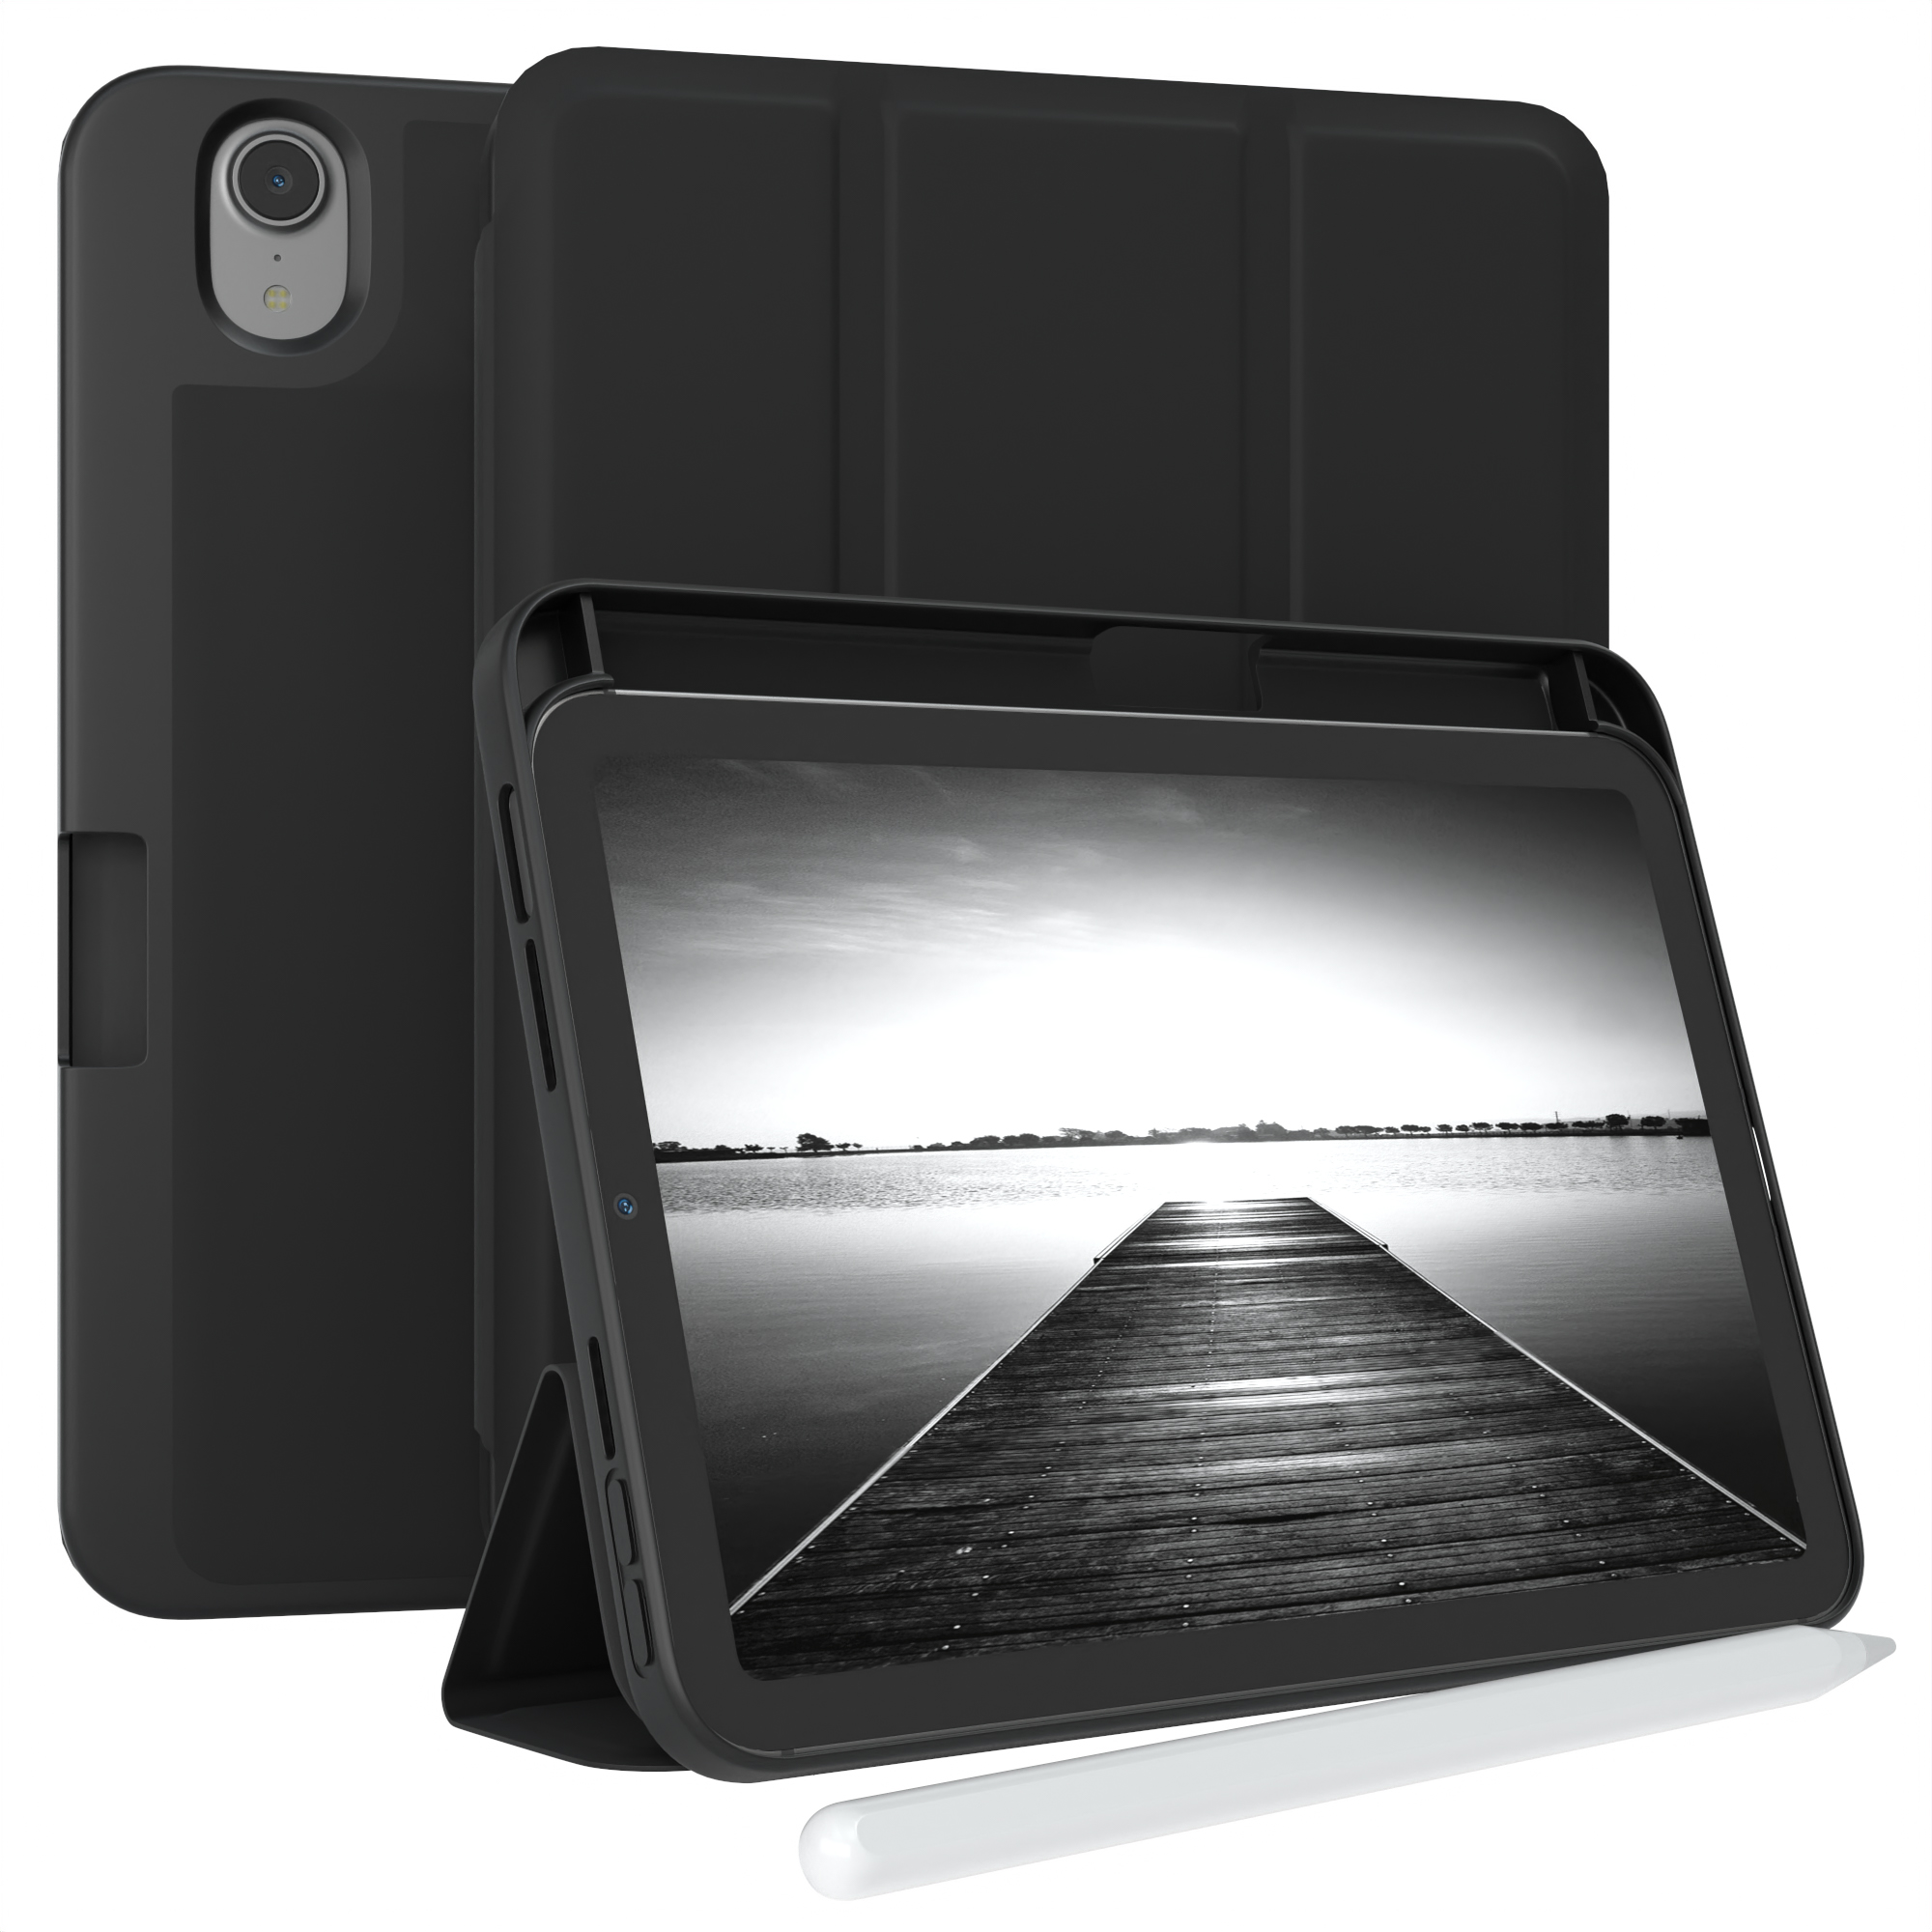 EAZY CASE Smartcase mit 2021 für Stifthalter Bookcover Mini Schwarz Tablethülle Apple Kunstleder, iPad 6